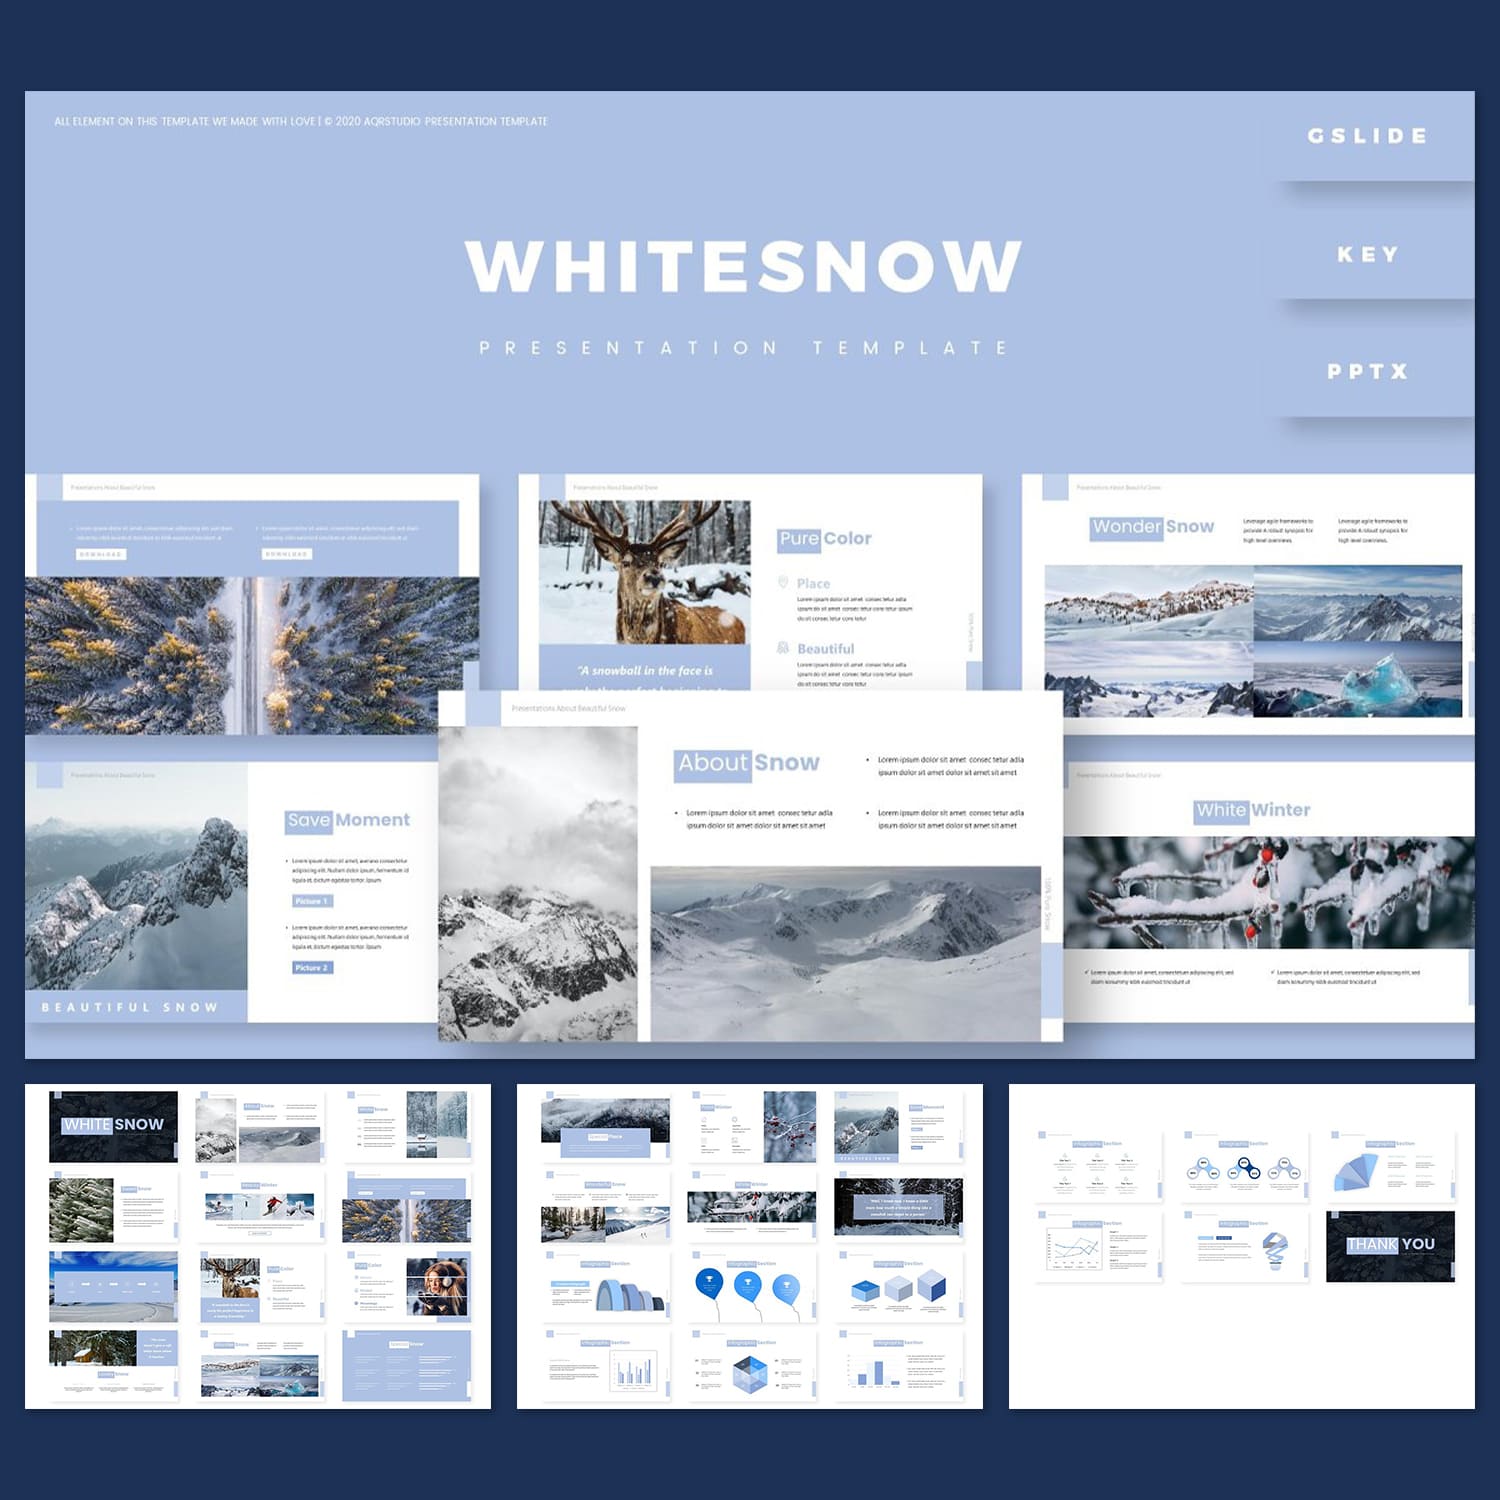 White Snow - Presentation Template Example.